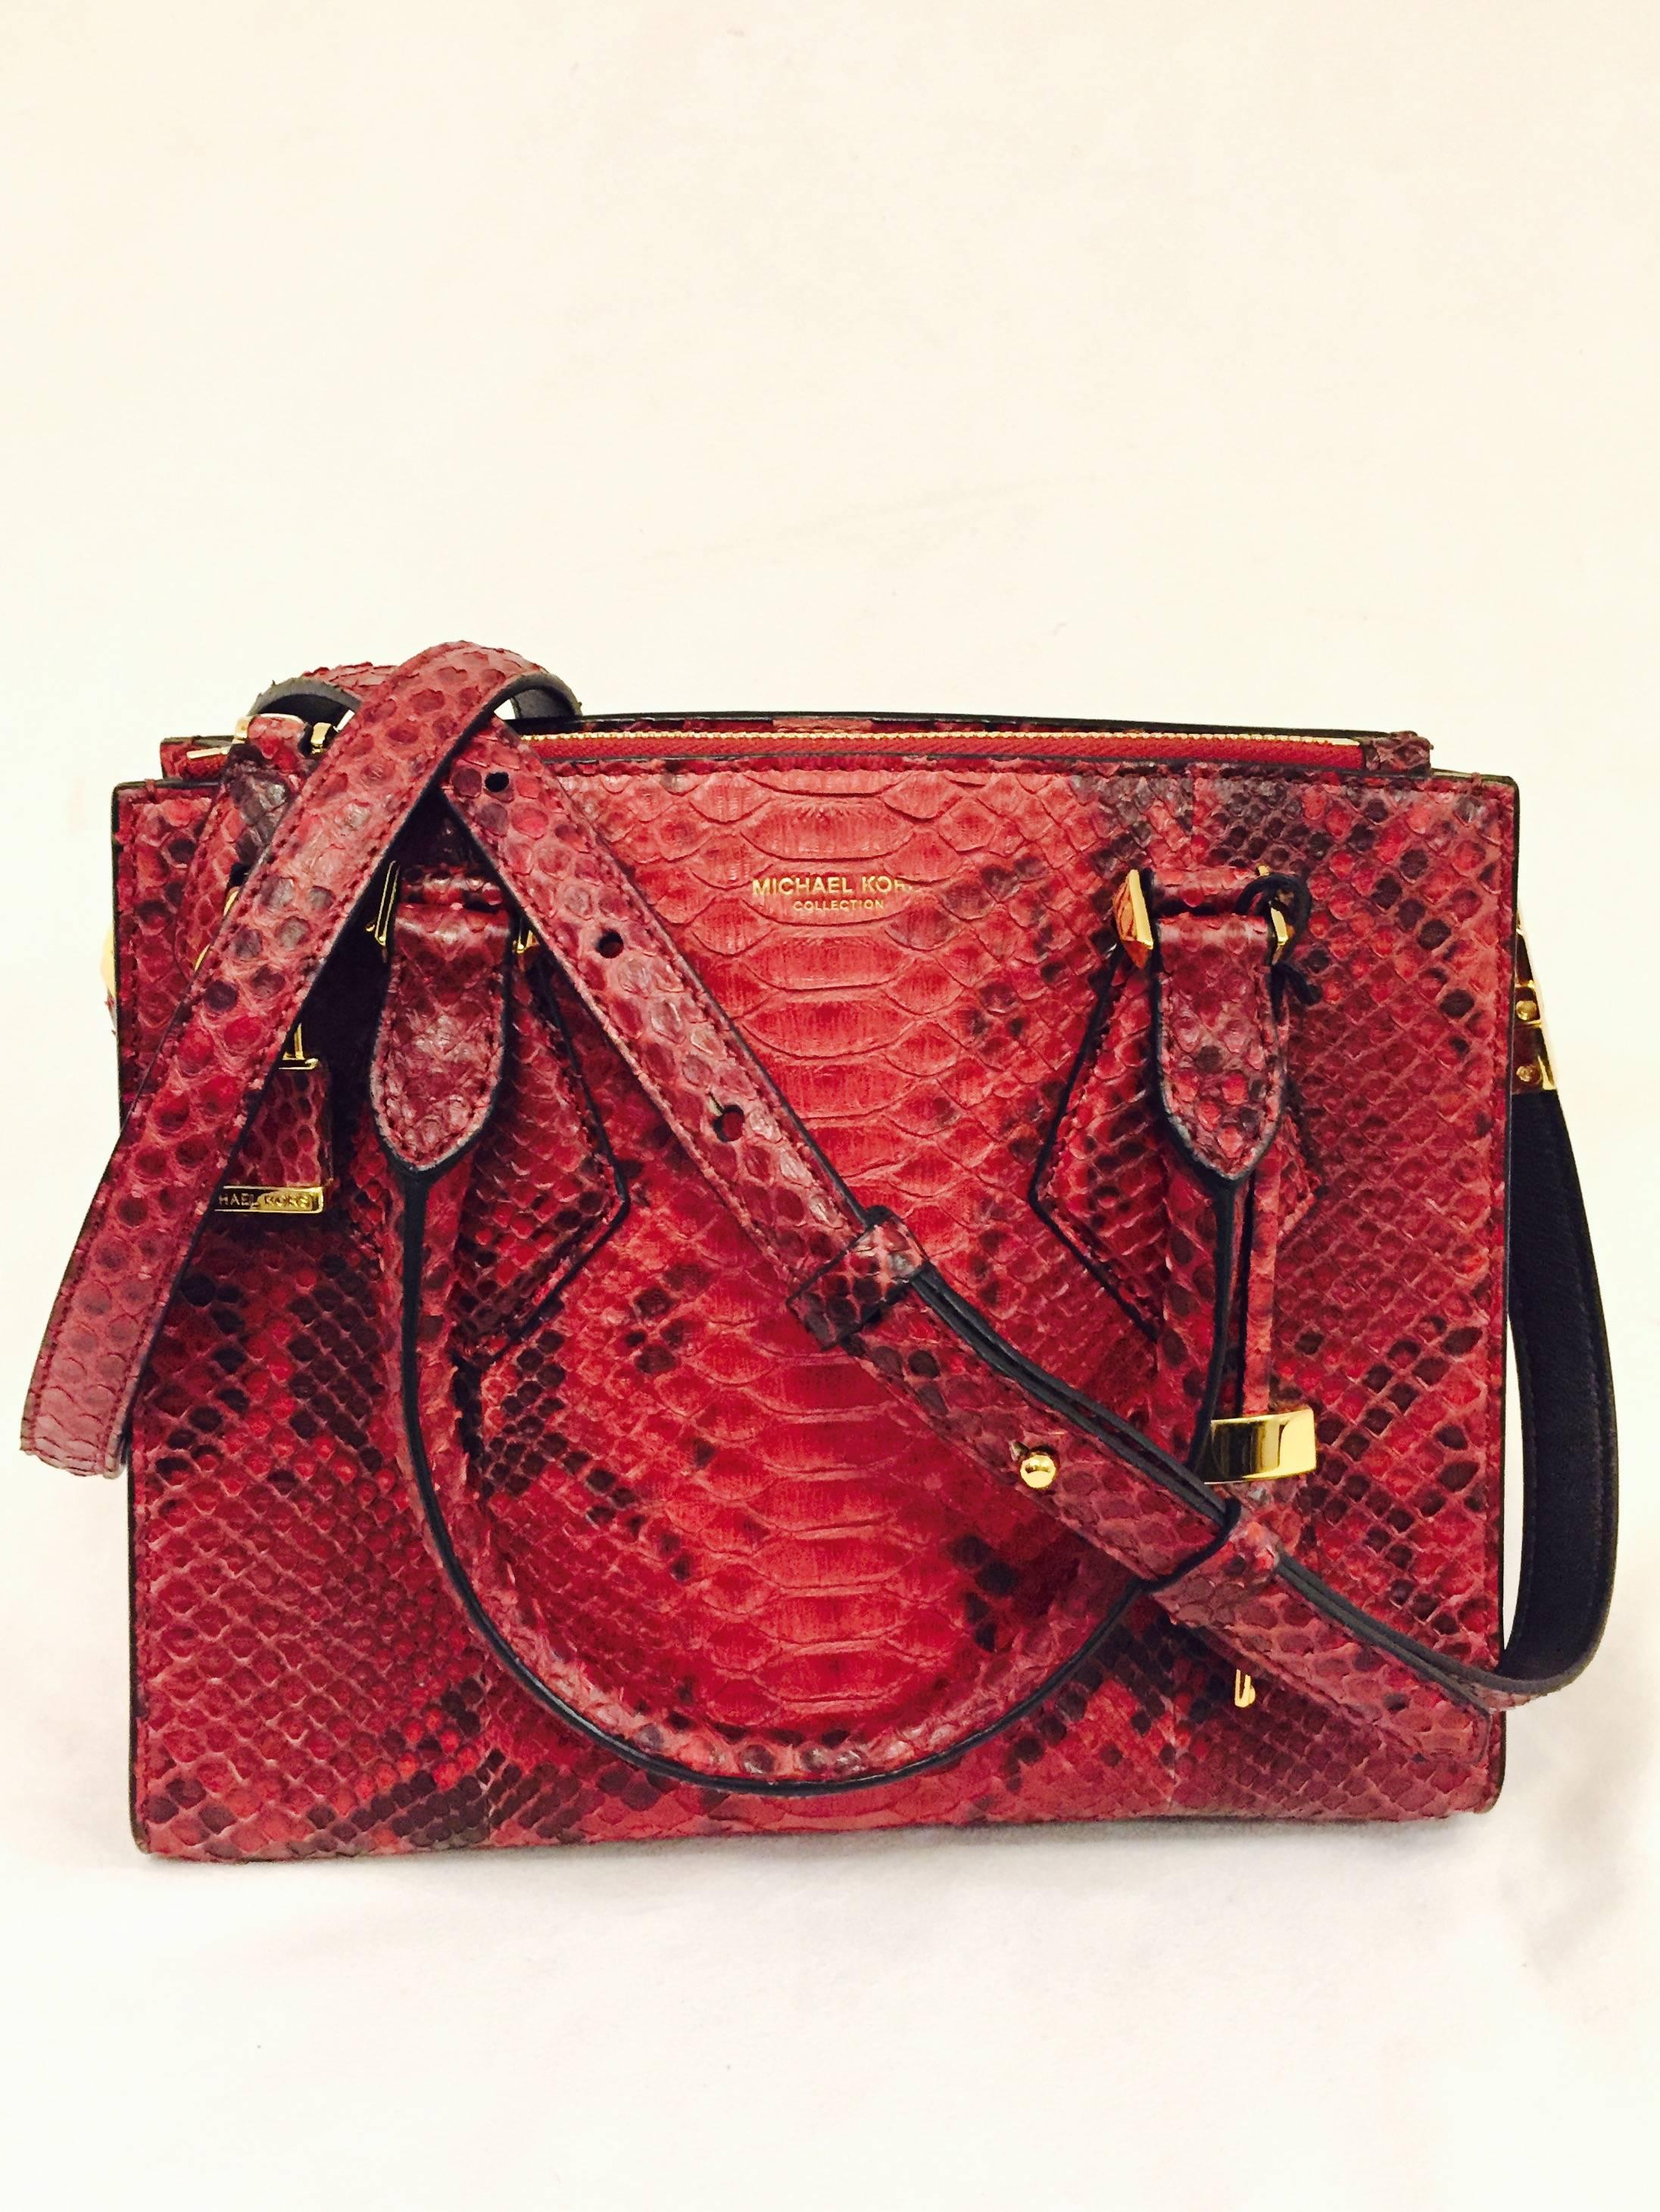 Marvelous Michael Kors Pink Python Casey Top Handle Structured Handbag 2